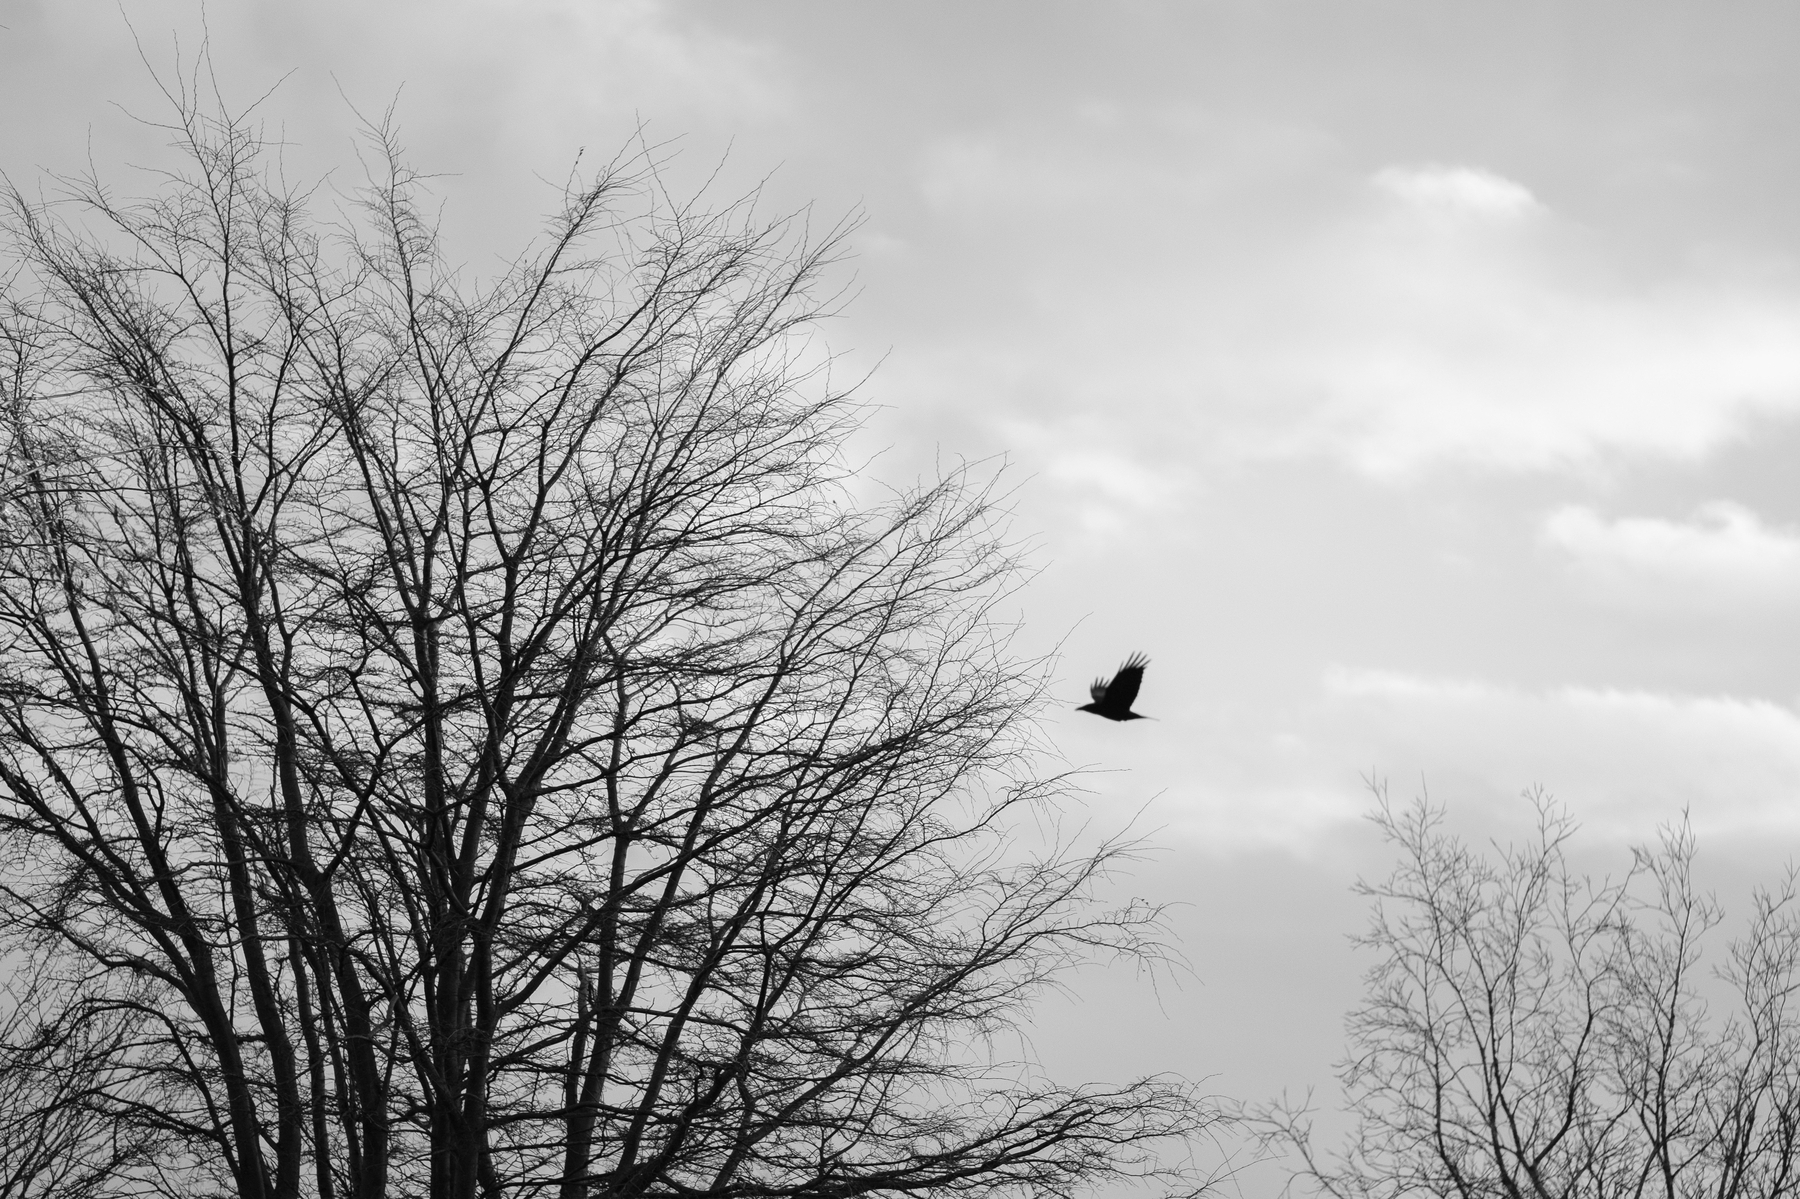 A raven flies past a tree.